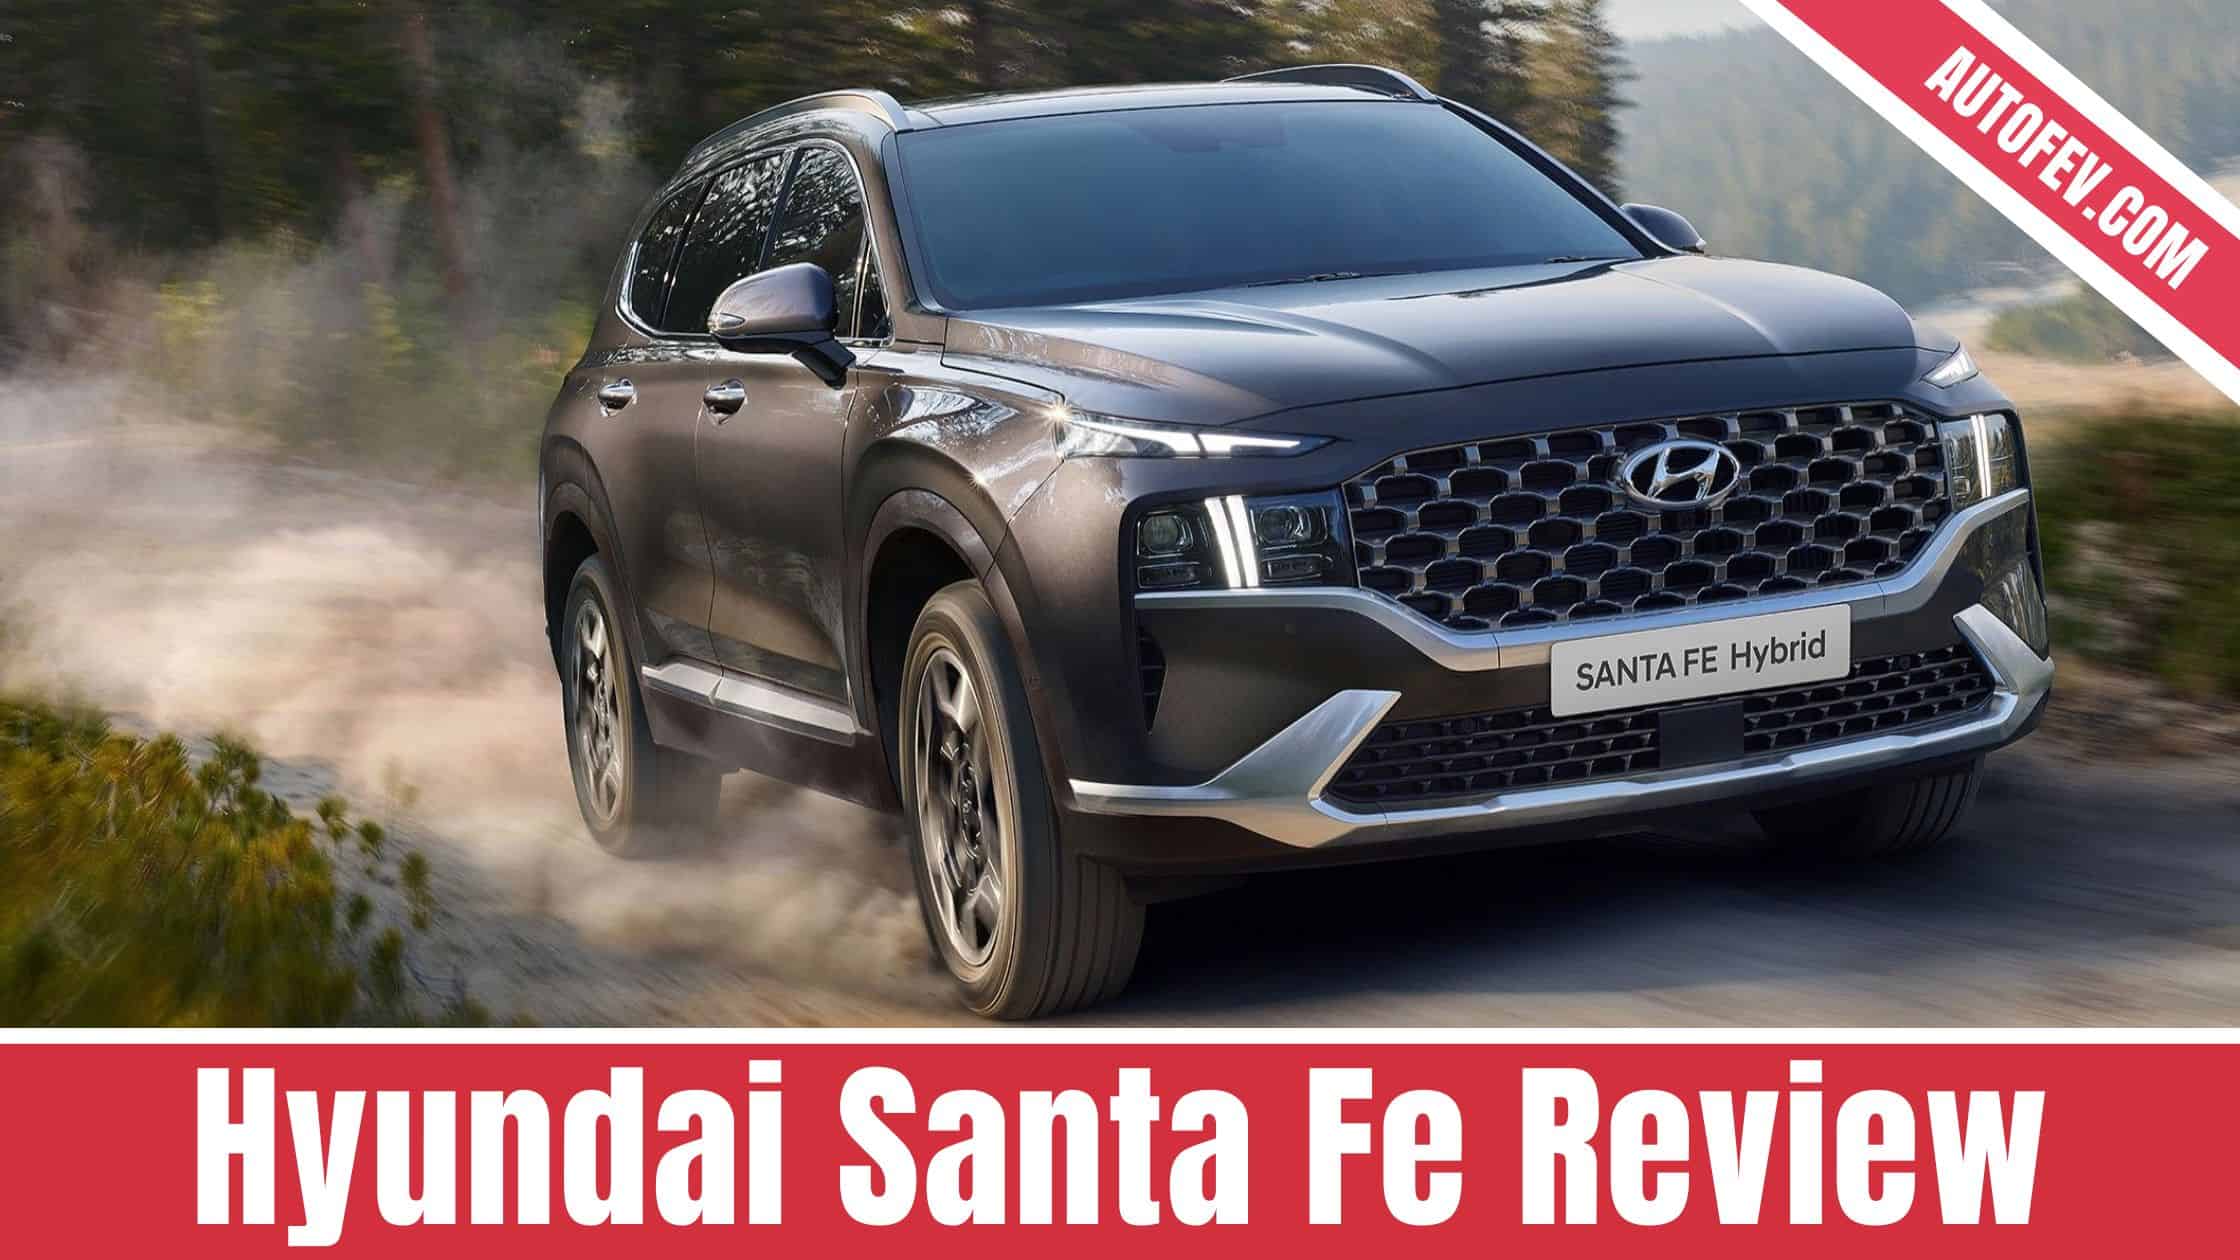 Hyundai Santa Fe Review